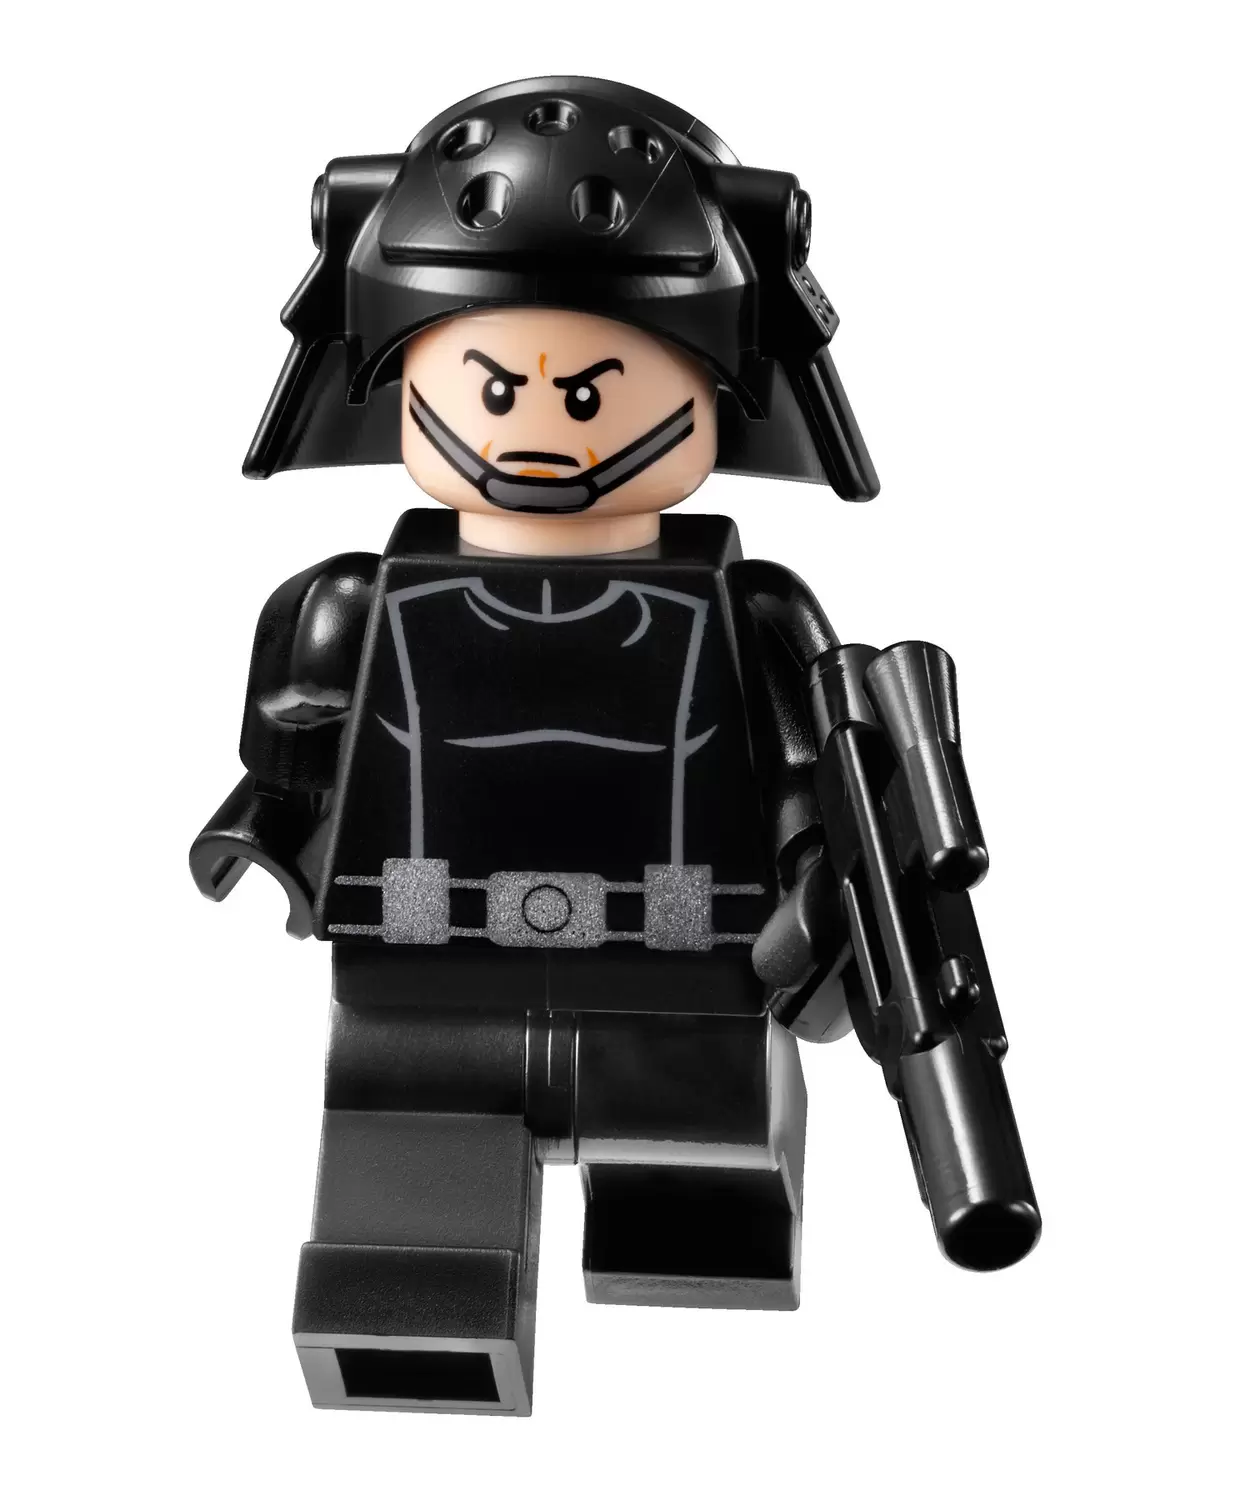 LEGO Star Wars Minifigs - Death Star Trooper